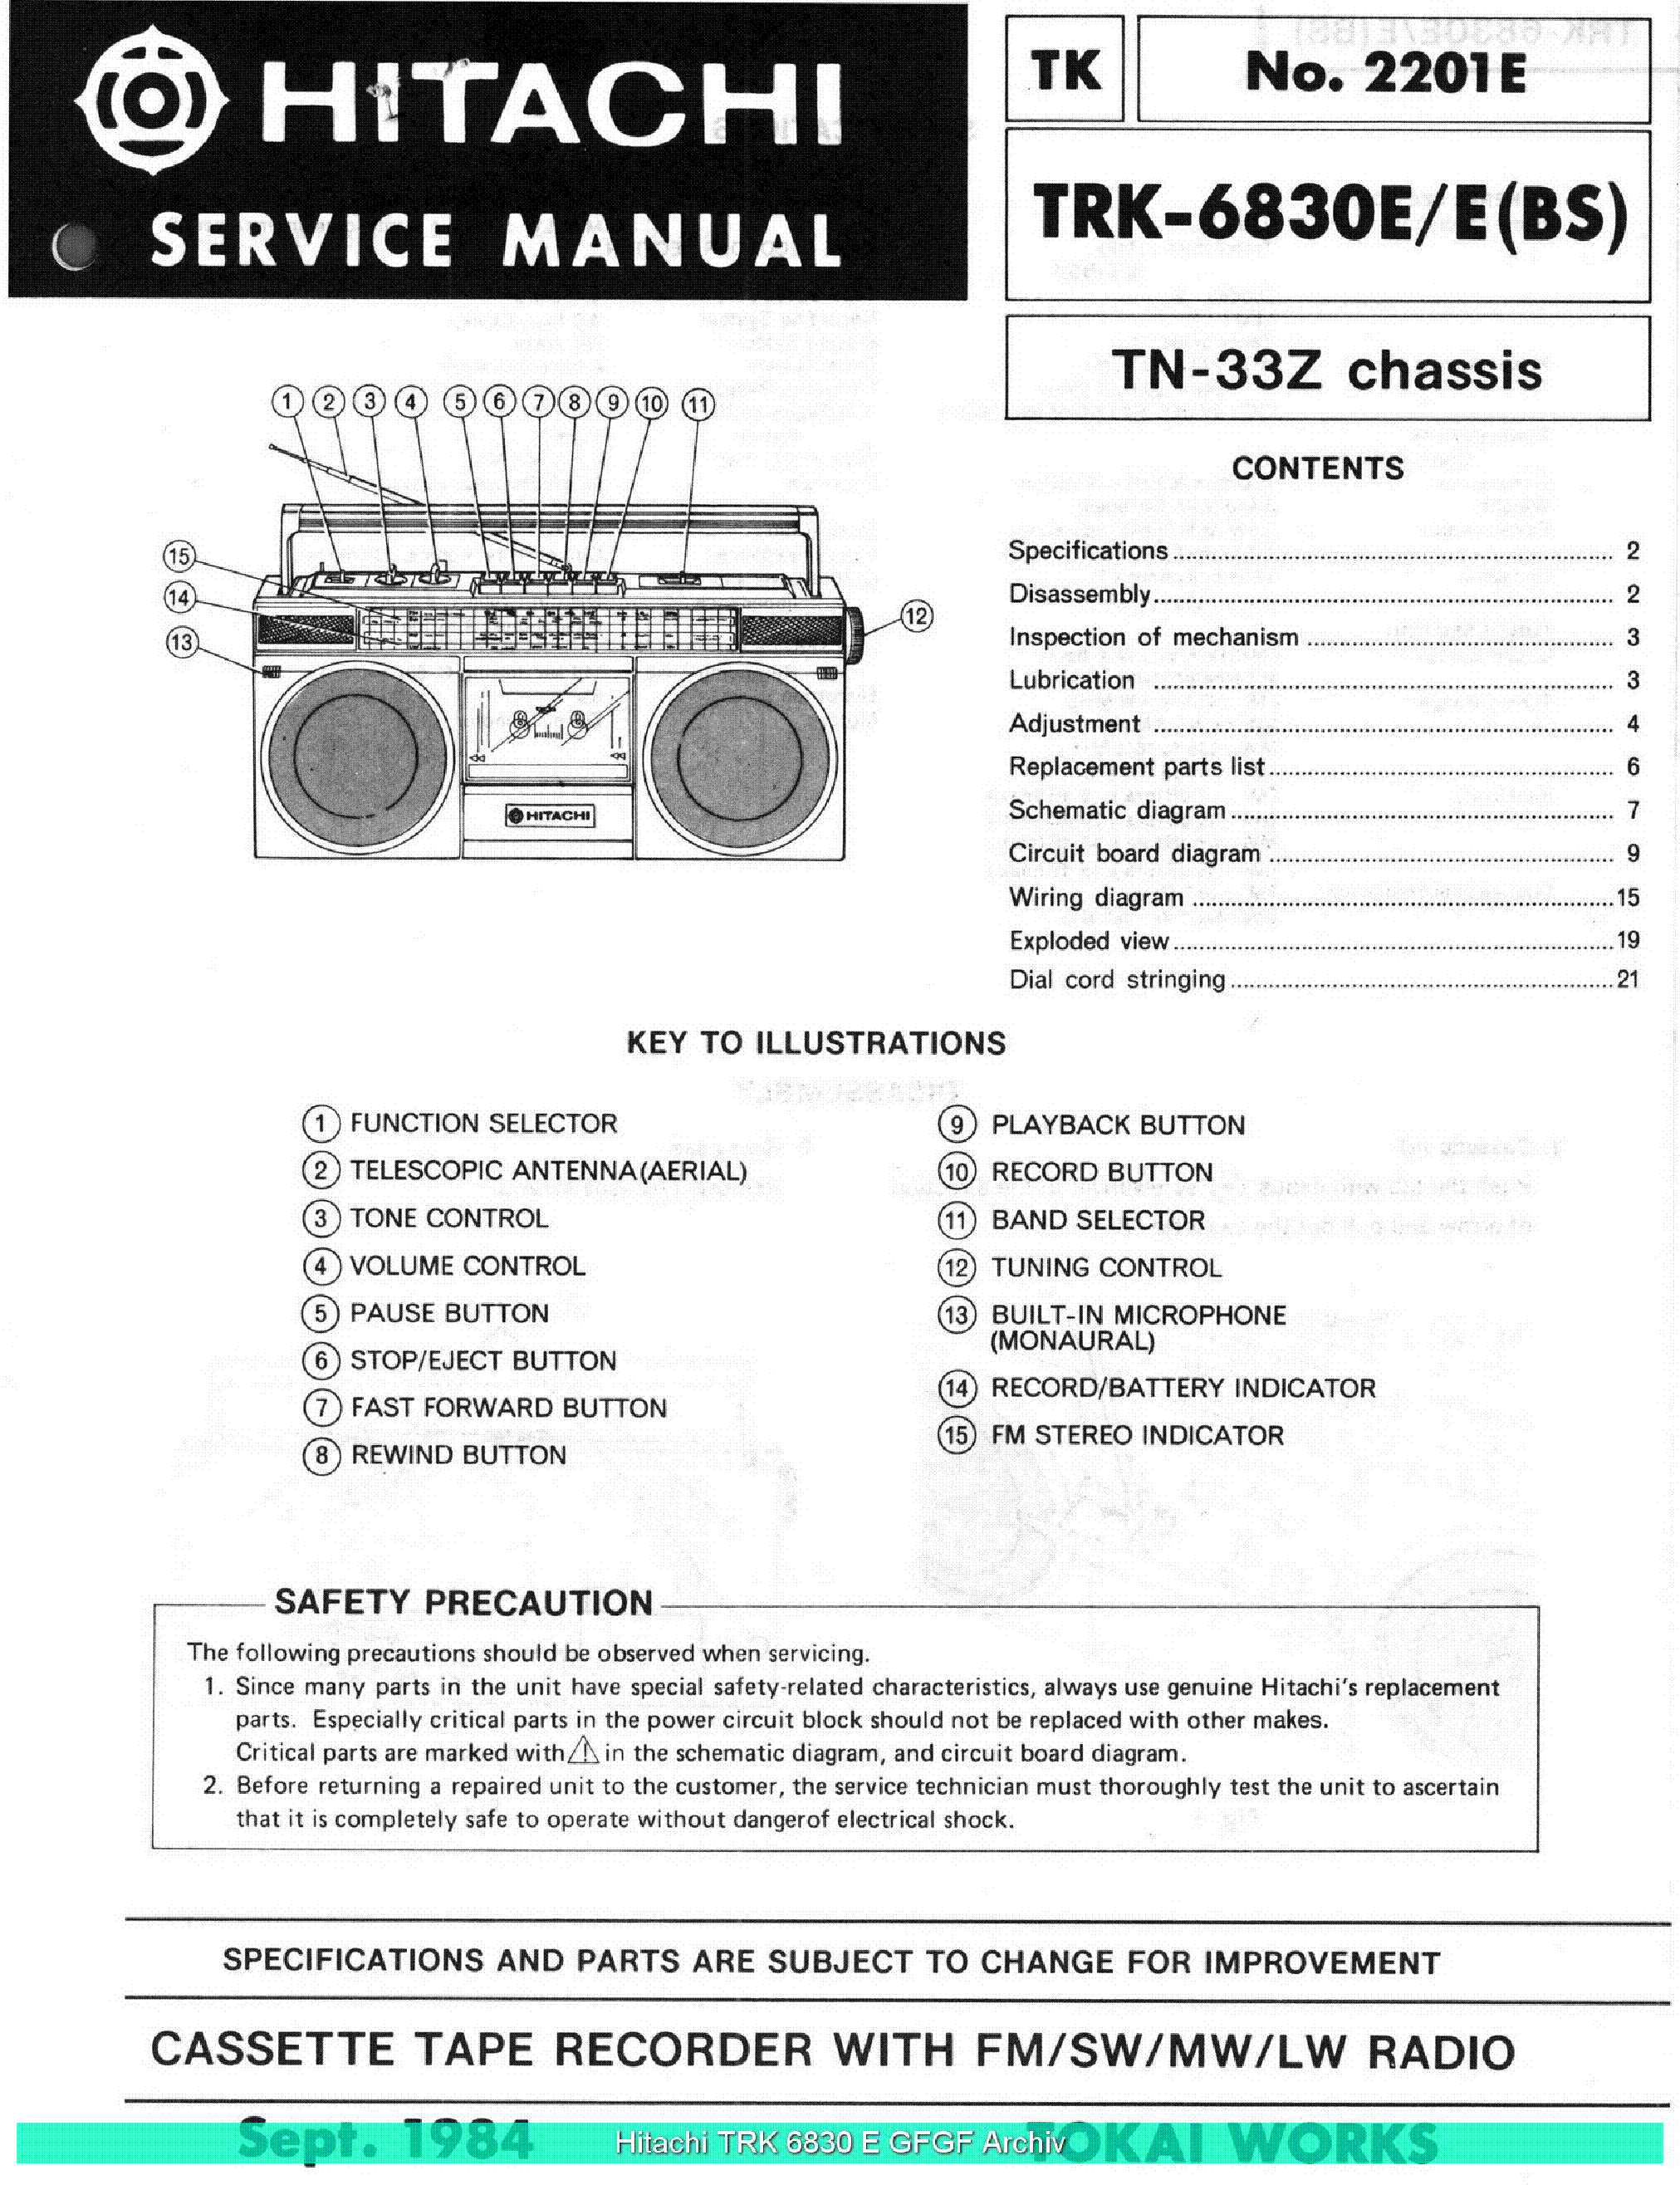 HITACHI TRK-6830E SCHEMATIC service manual (1st page)